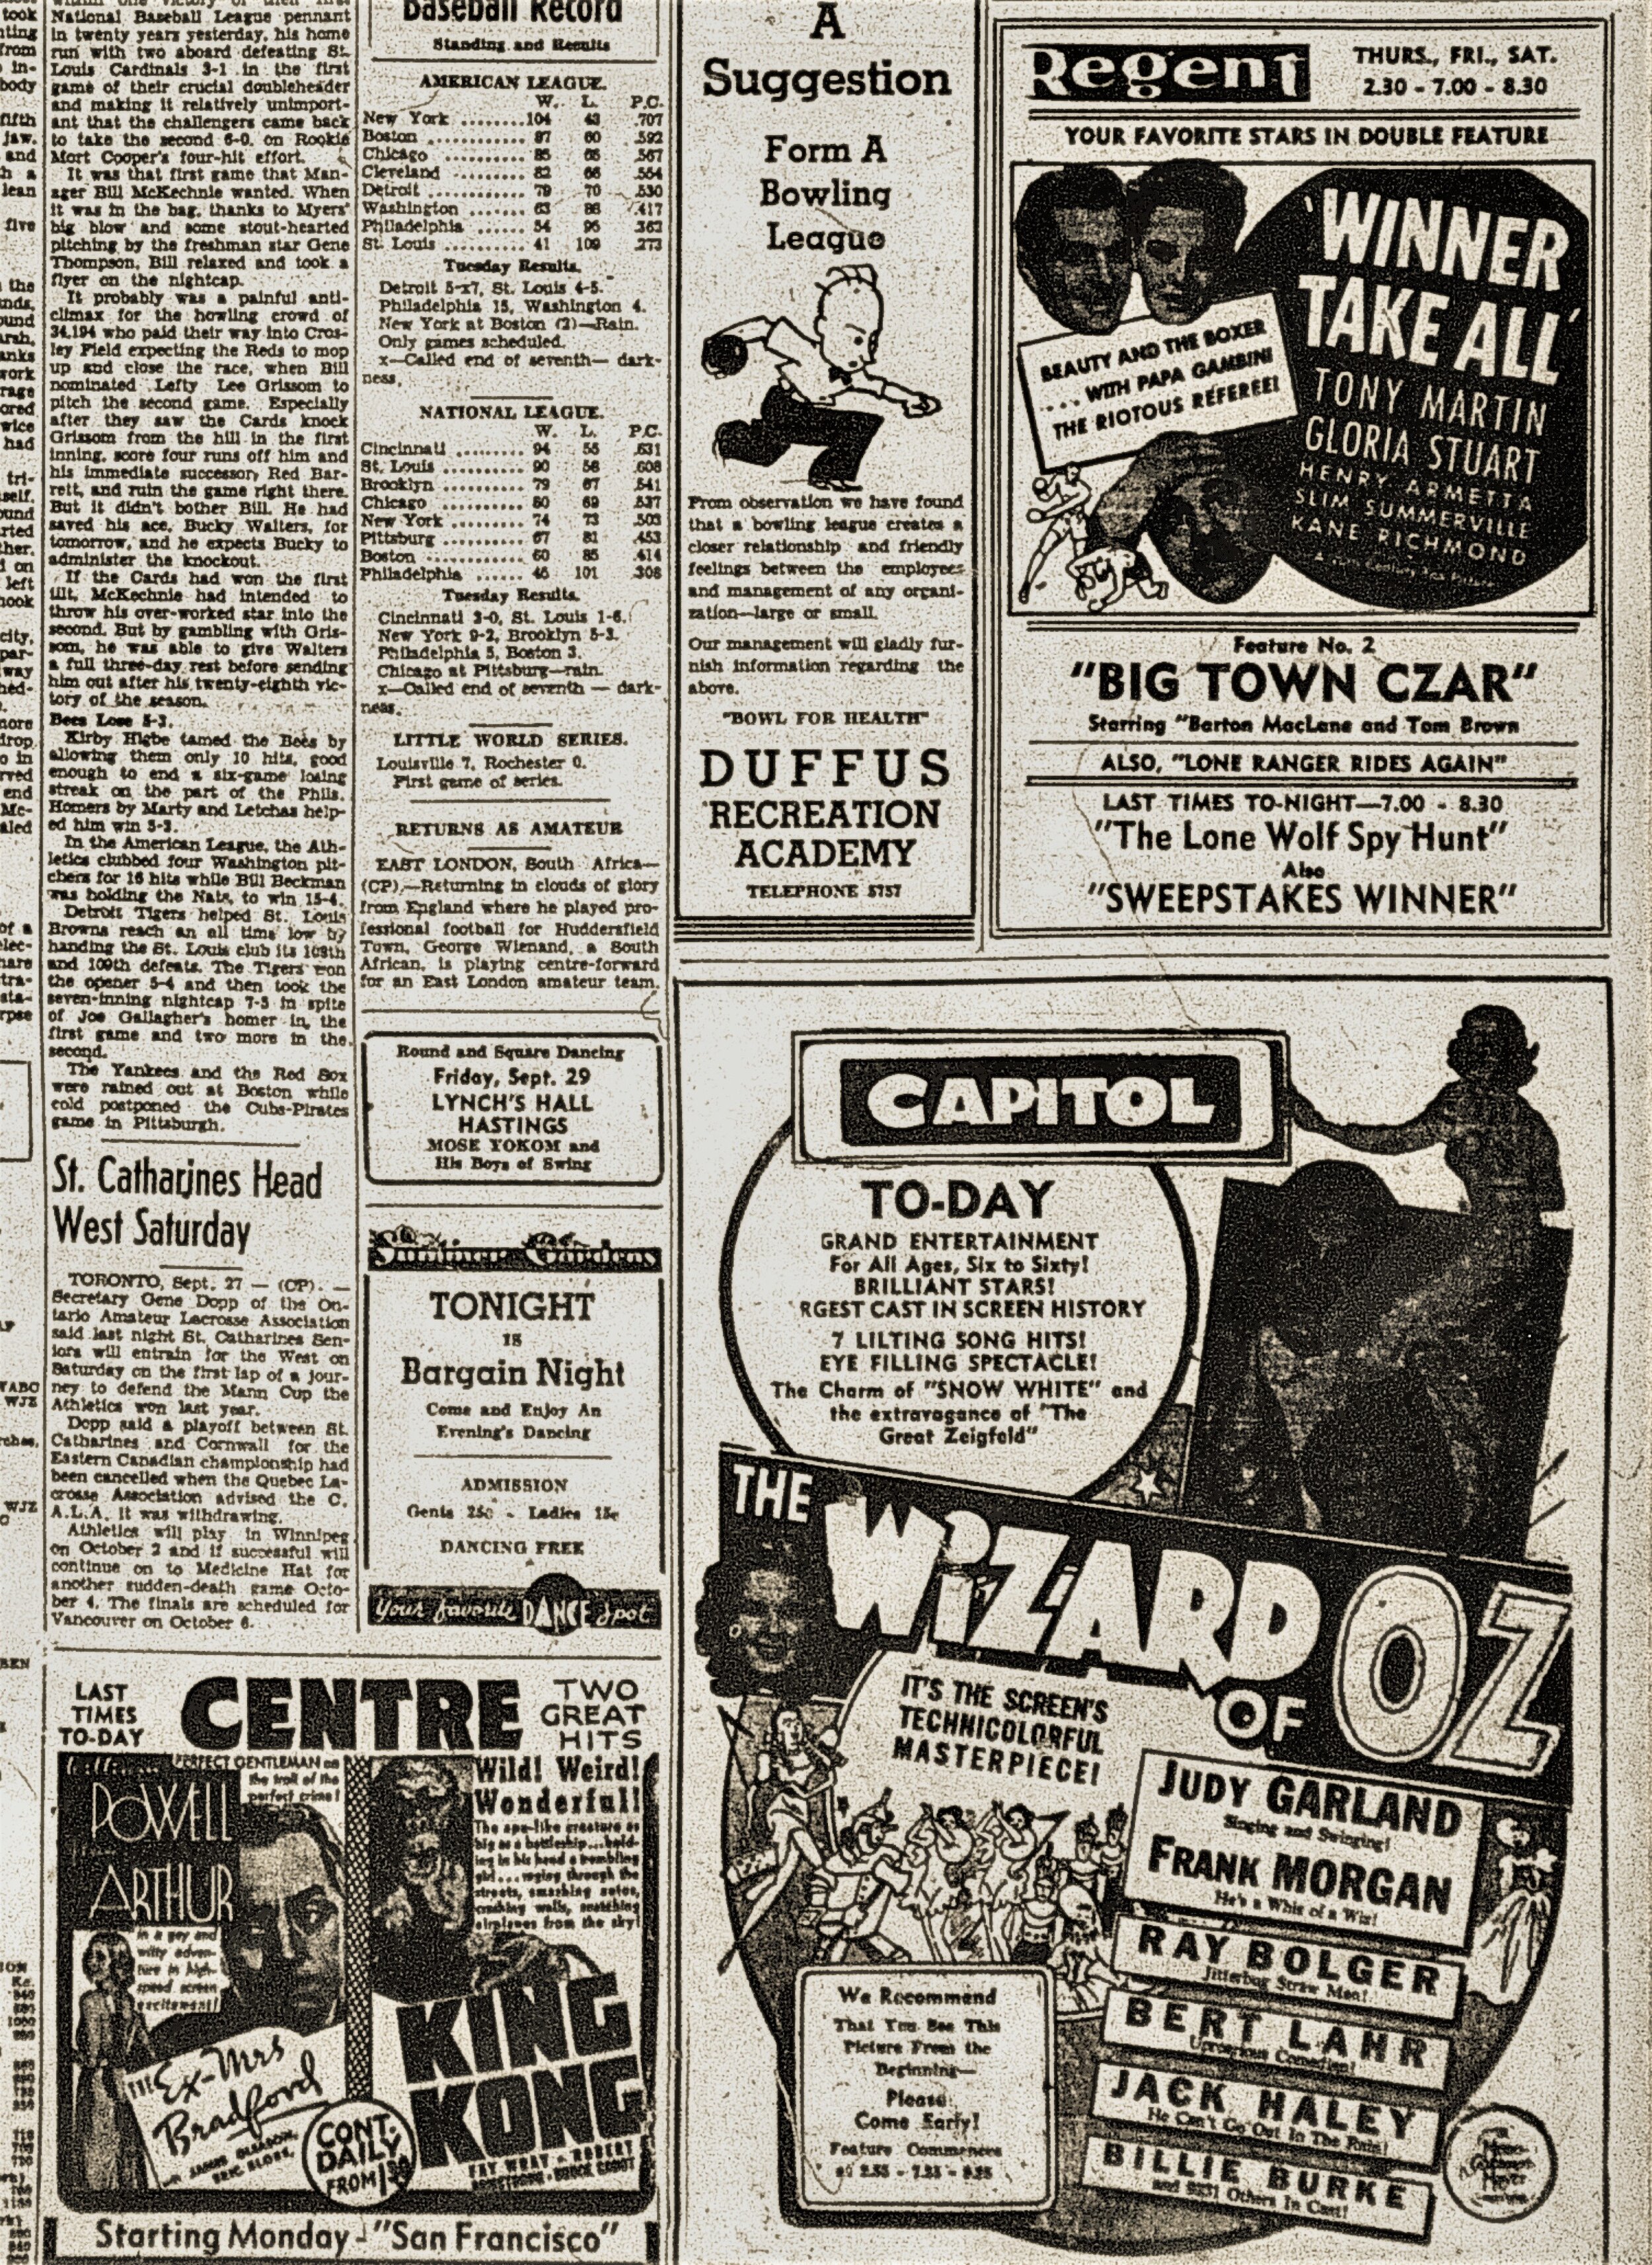 1939 Sept 27 p7 Regent Capitol Centre Wizard (2).JPG